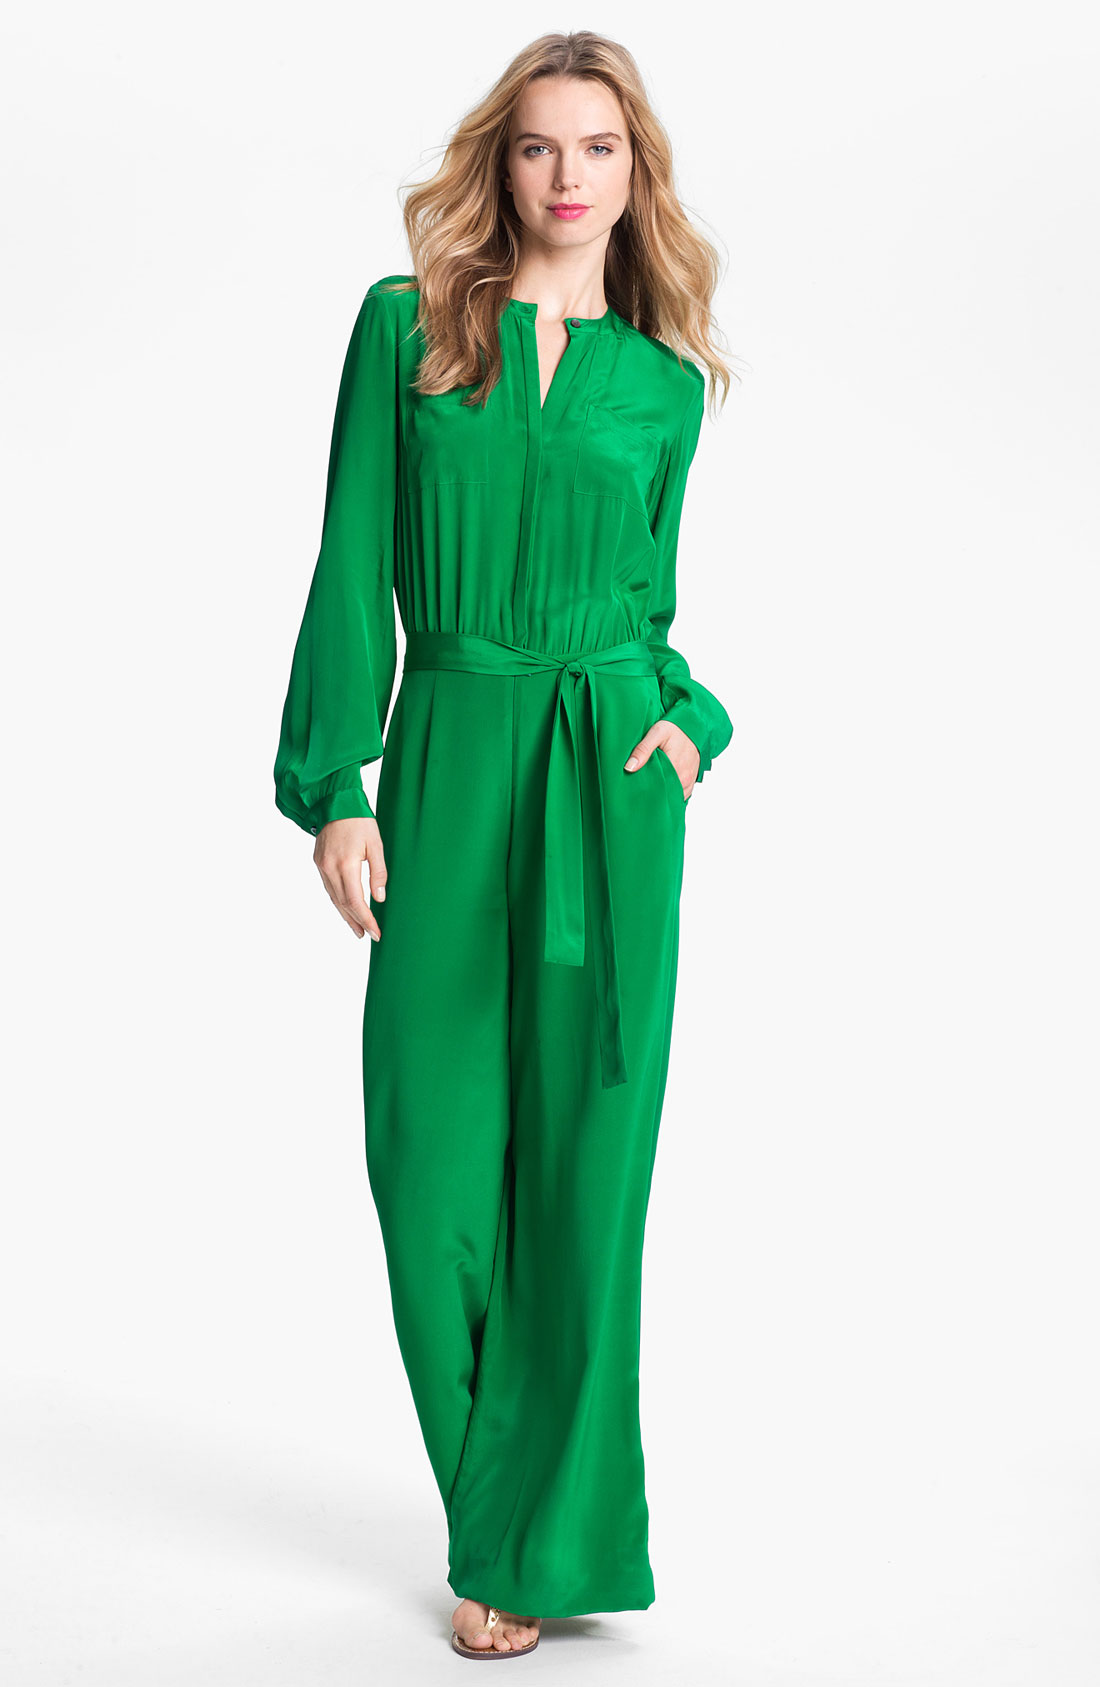 Green Jumpsuit | DressedUpGirl.com